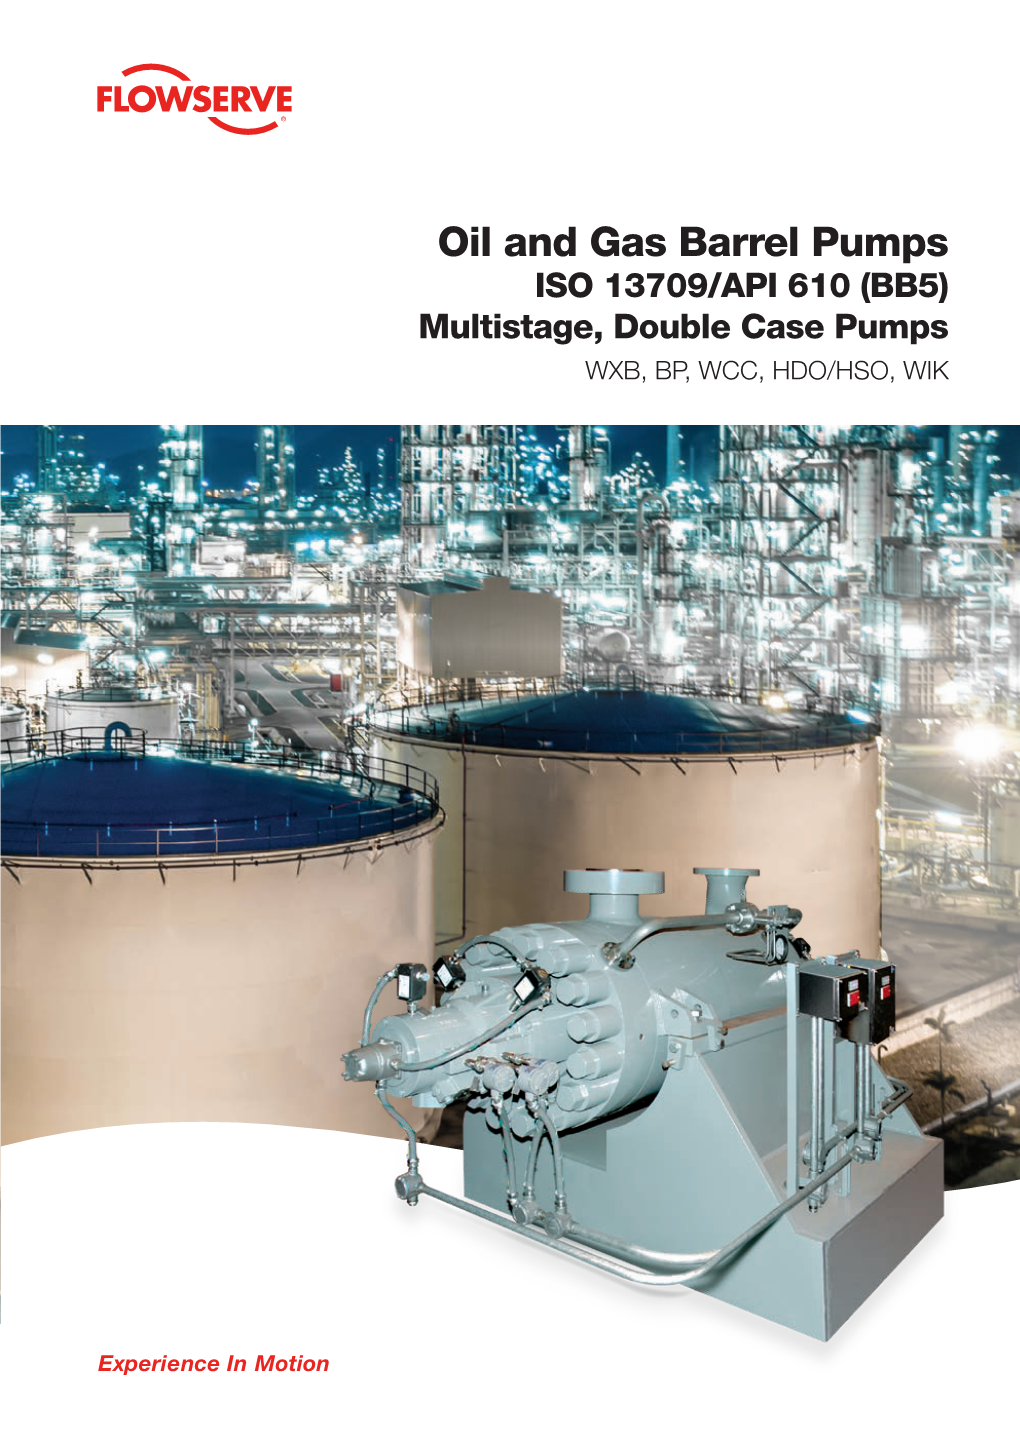 Oil and Gas Barrel Pumps ISO 13709/API 610 (BB5) Multistage, Double Case Pumps WXB, BP, WCC, HDO/HSO, WIK